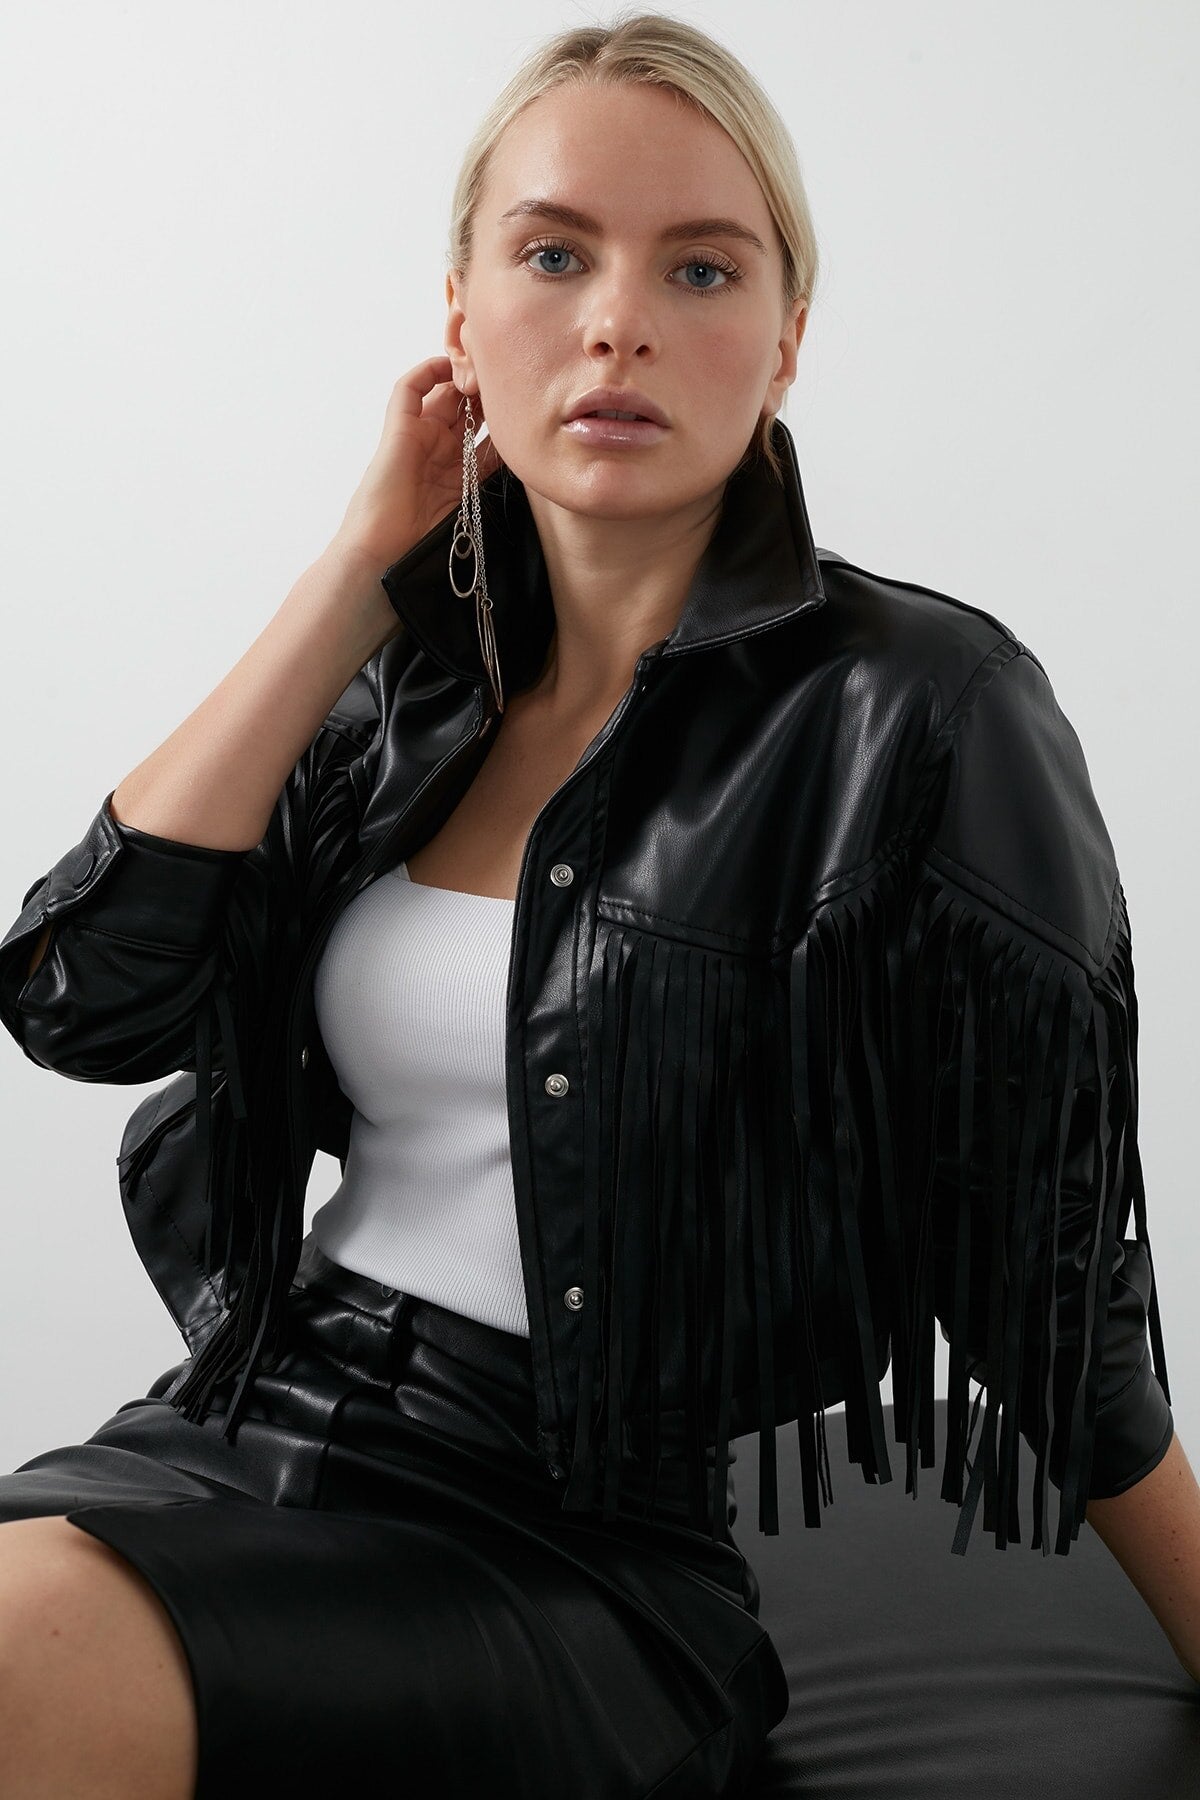 new high quality women fashion autumn winter black faux leather jackets zipper tasseled crop top cowboy jacket 3 colors coat